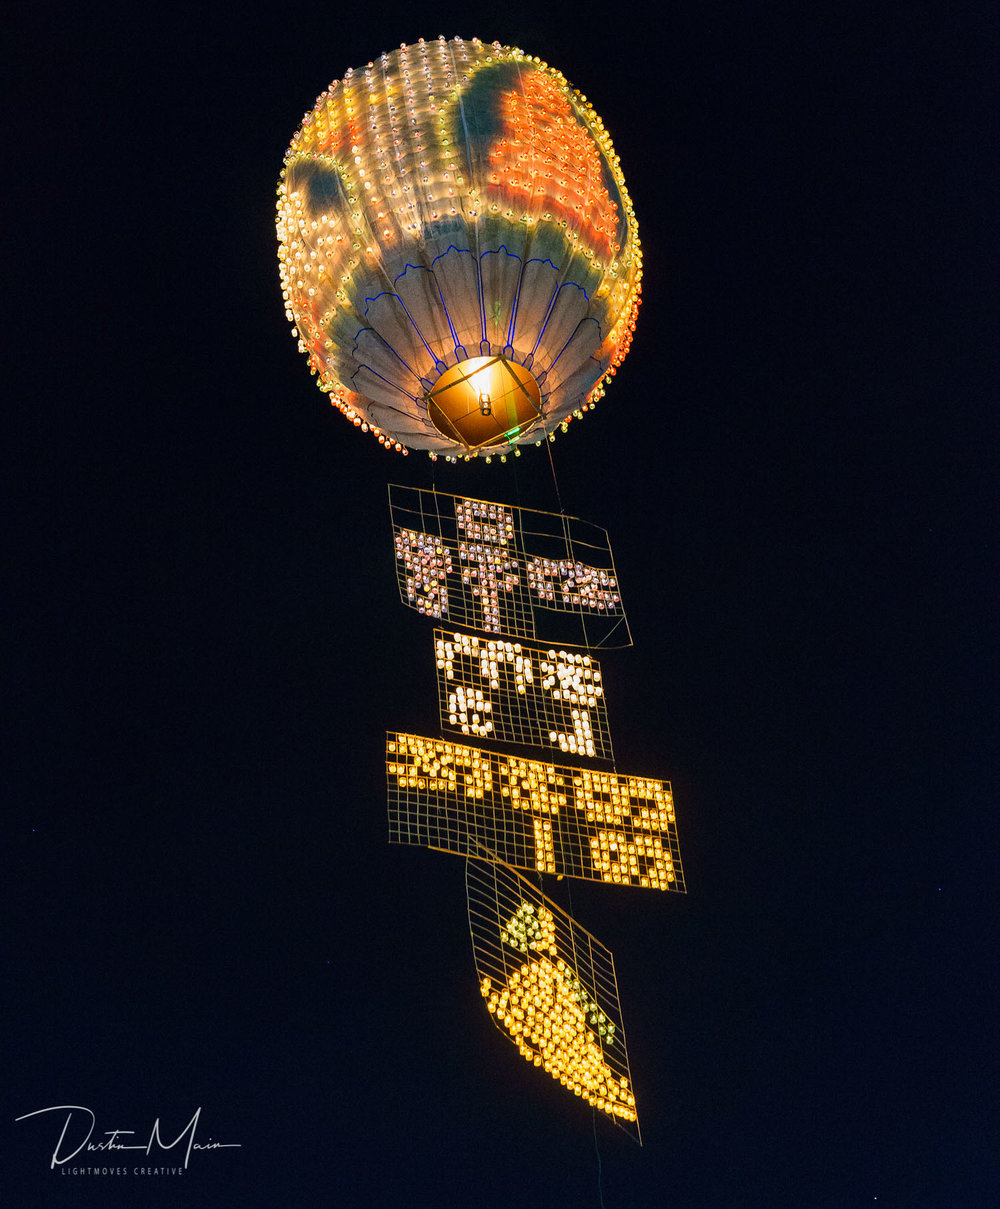  Sein Na Pan fire balloon takes flight.  © Dustin Main 2015 